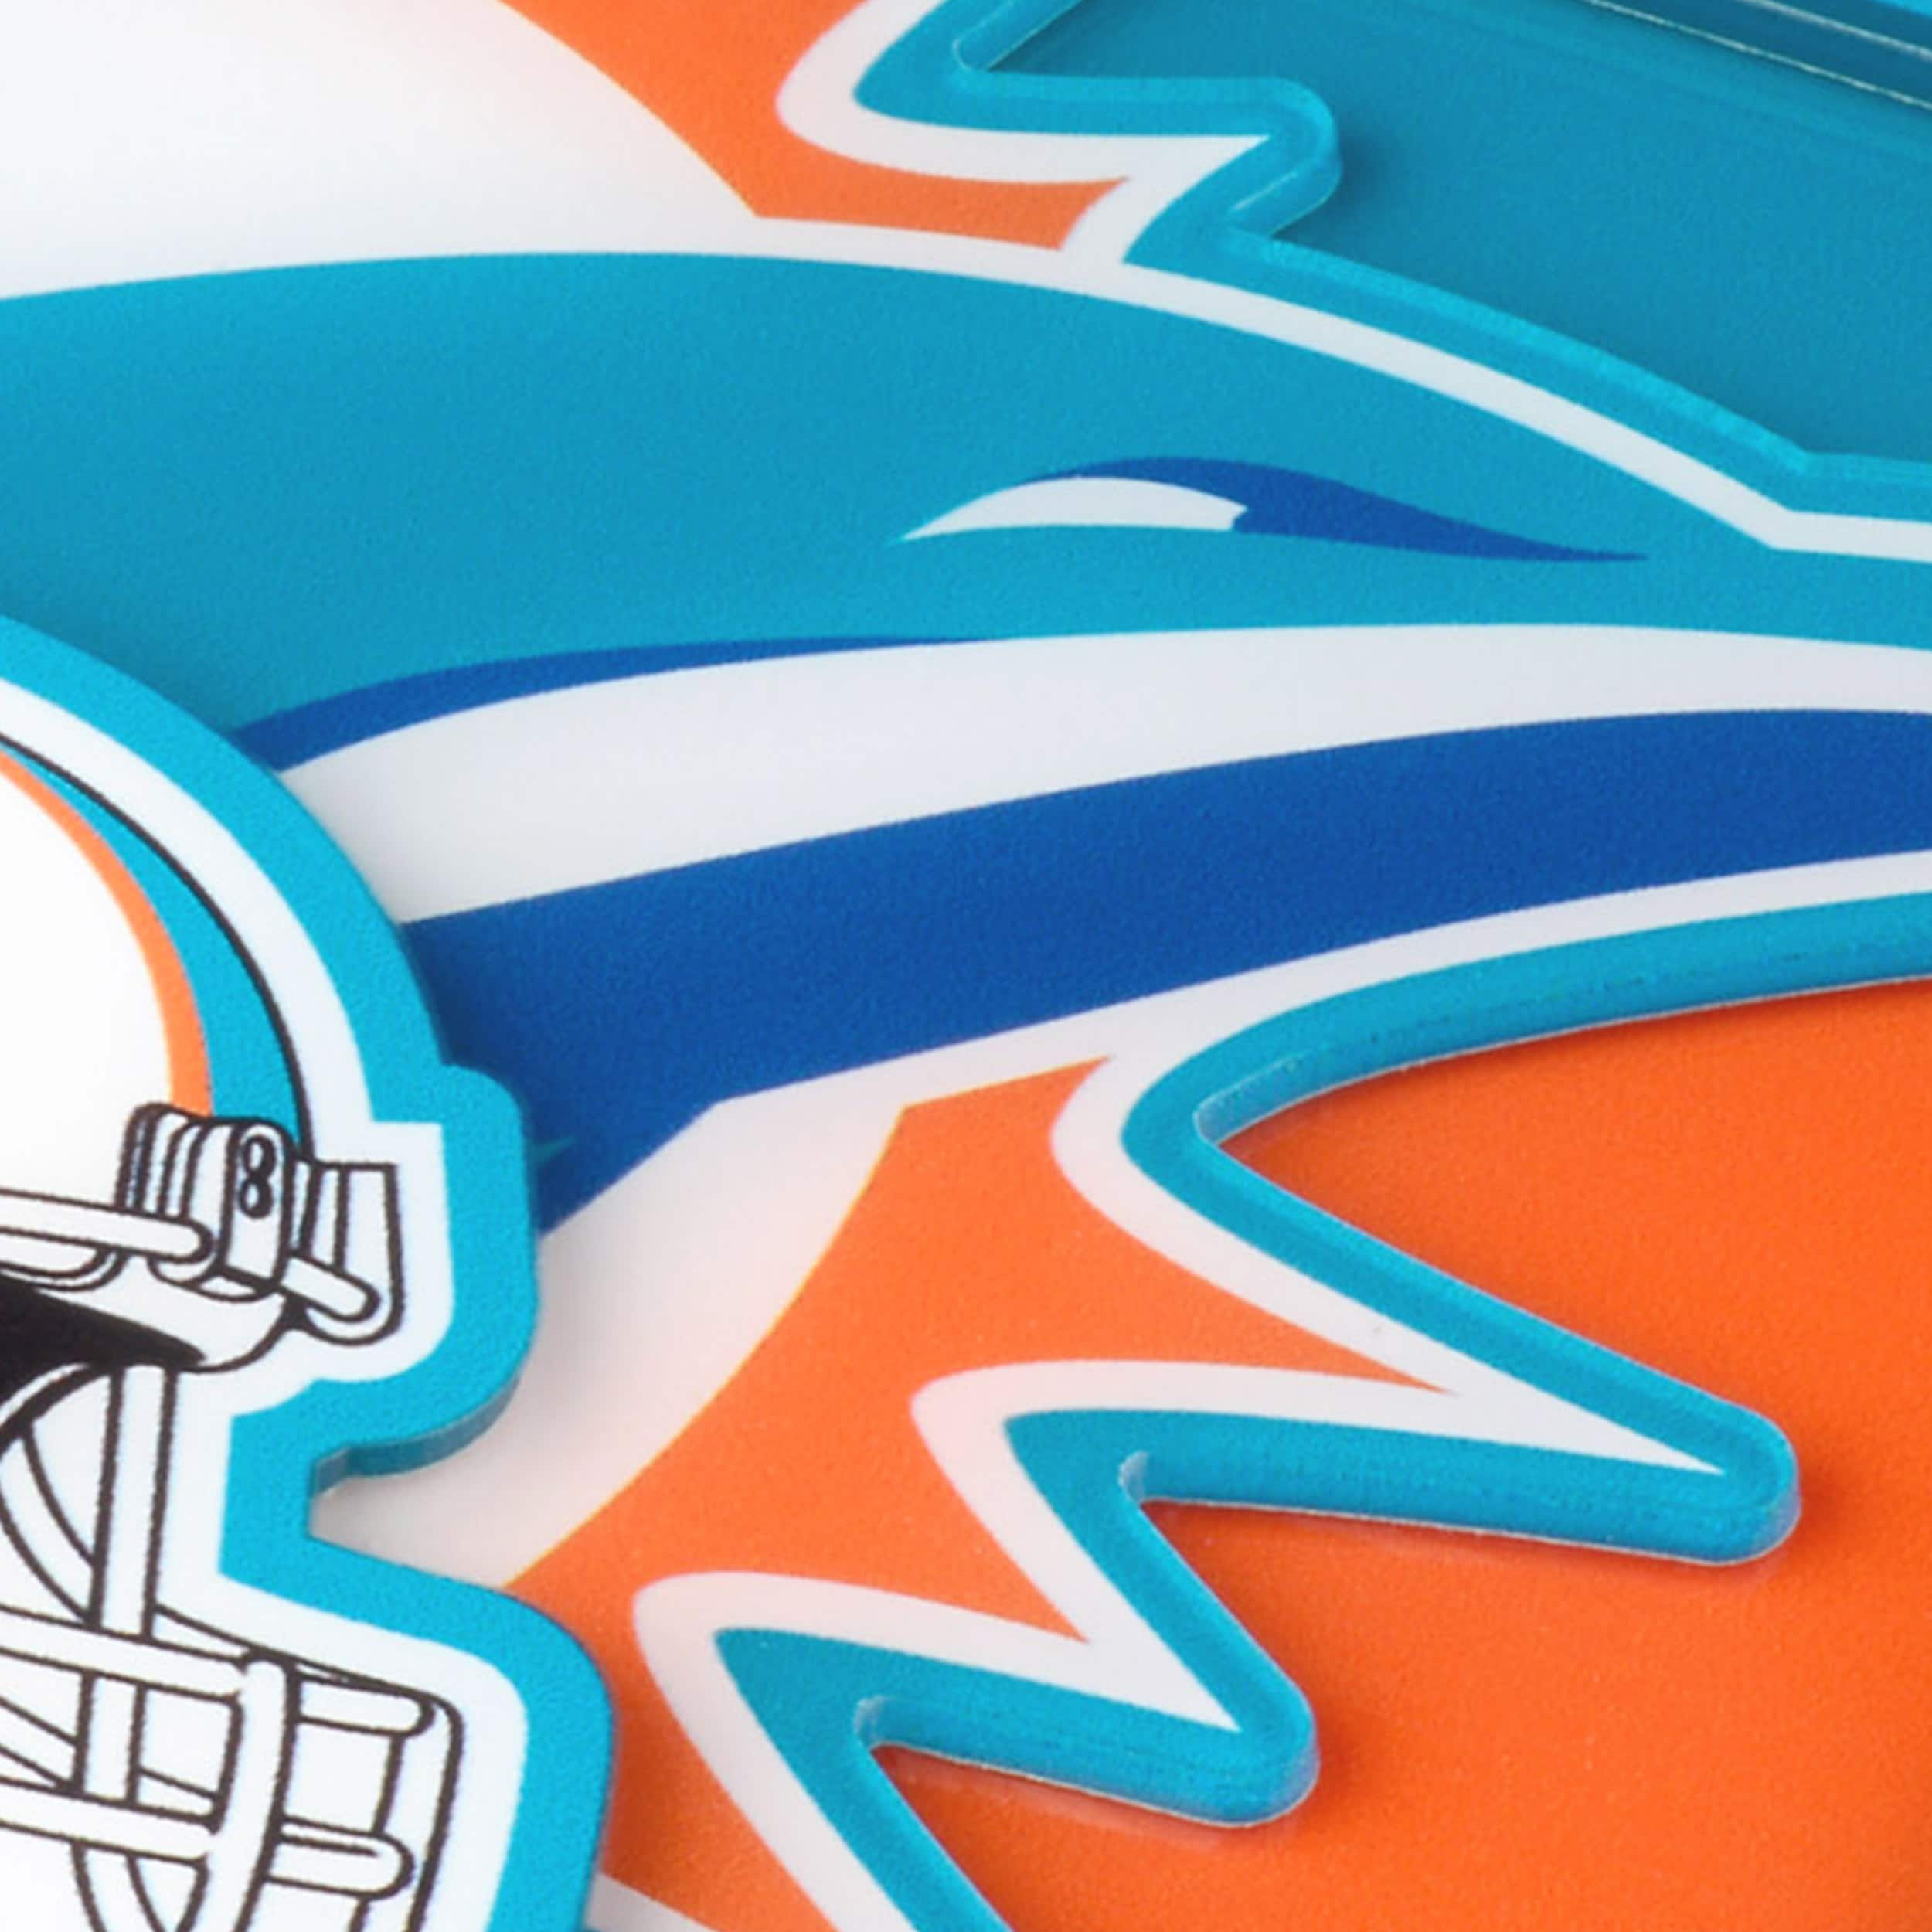 NFL 3D Logo Series Coaster Set